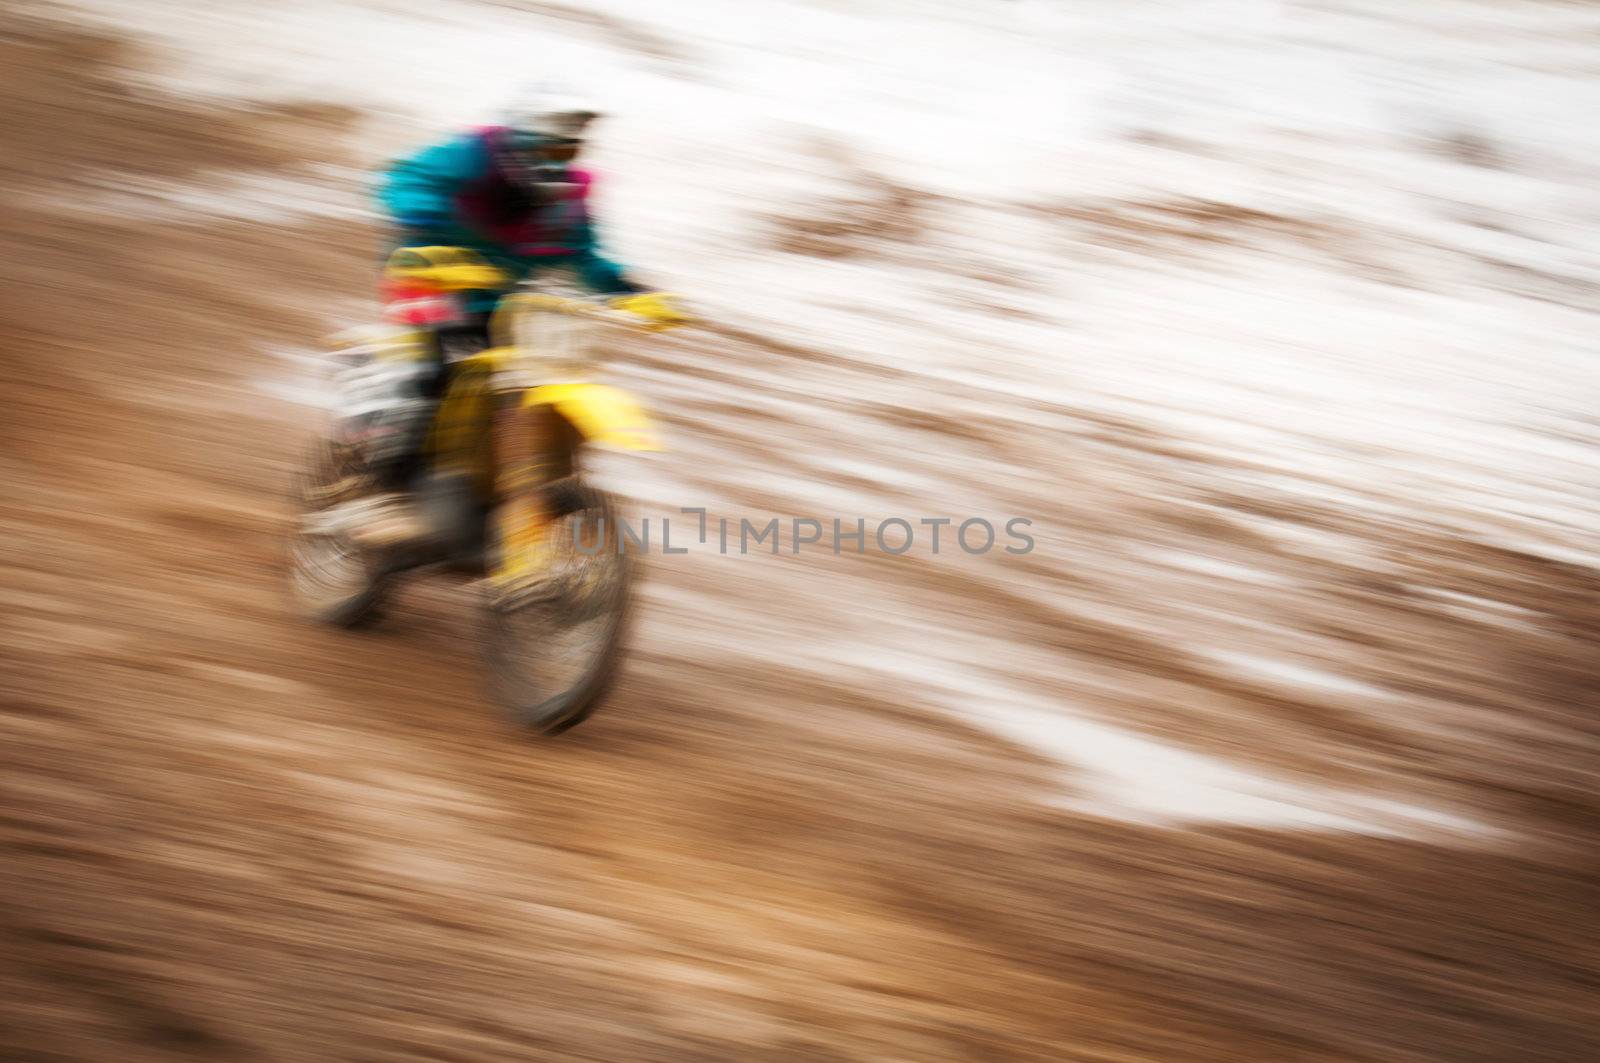 Motocross bike rider in motion by iryna_rasko